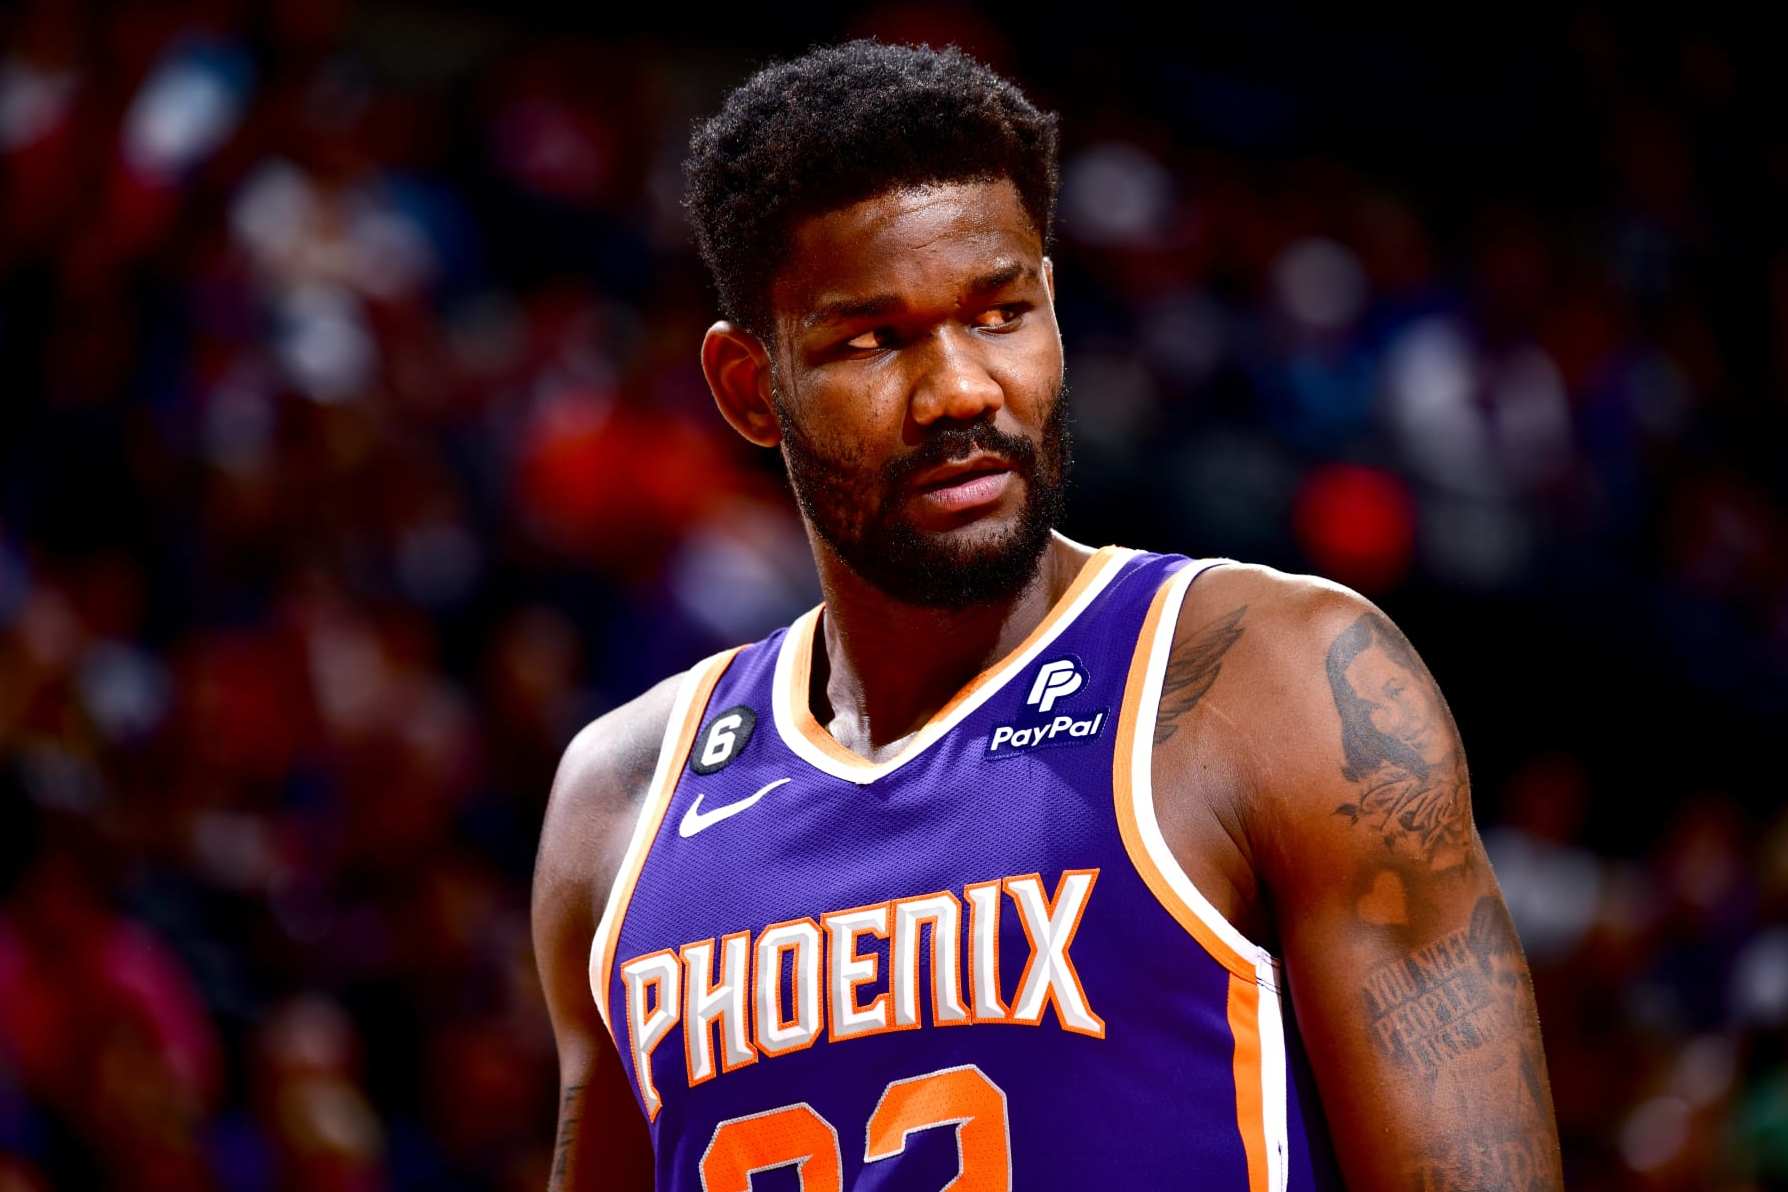 No Deandre Ayton, no problem for the Phoenix Suns this season